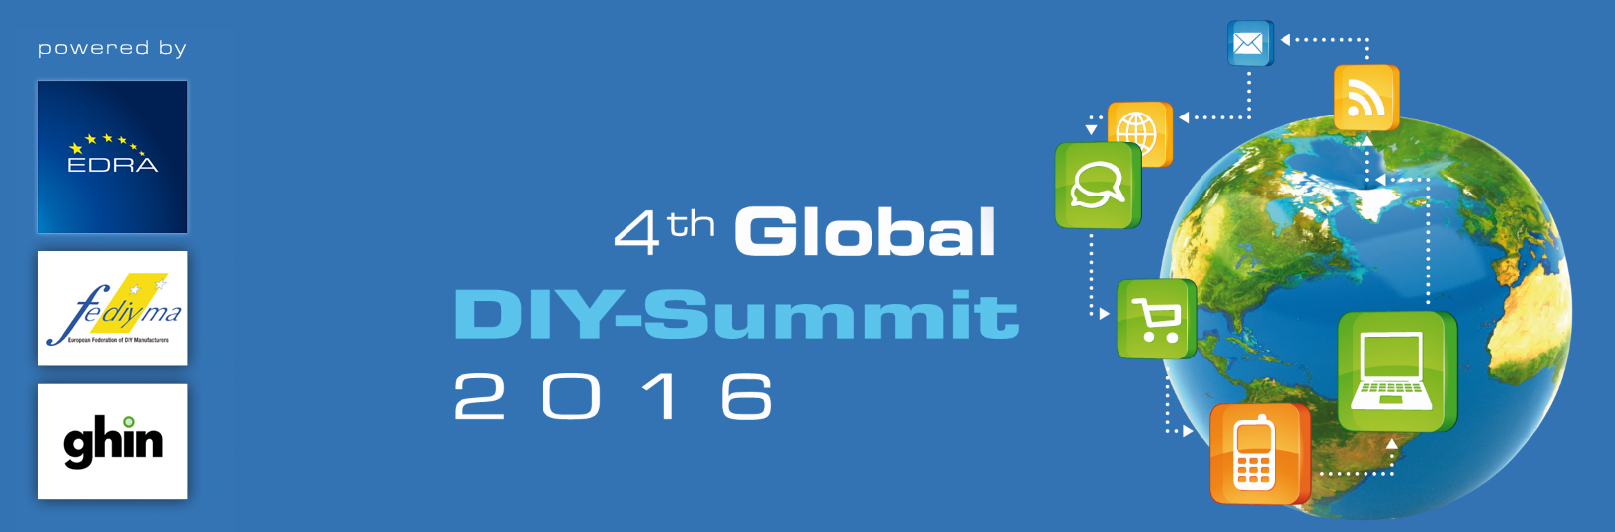 Global DIY Summit 2016